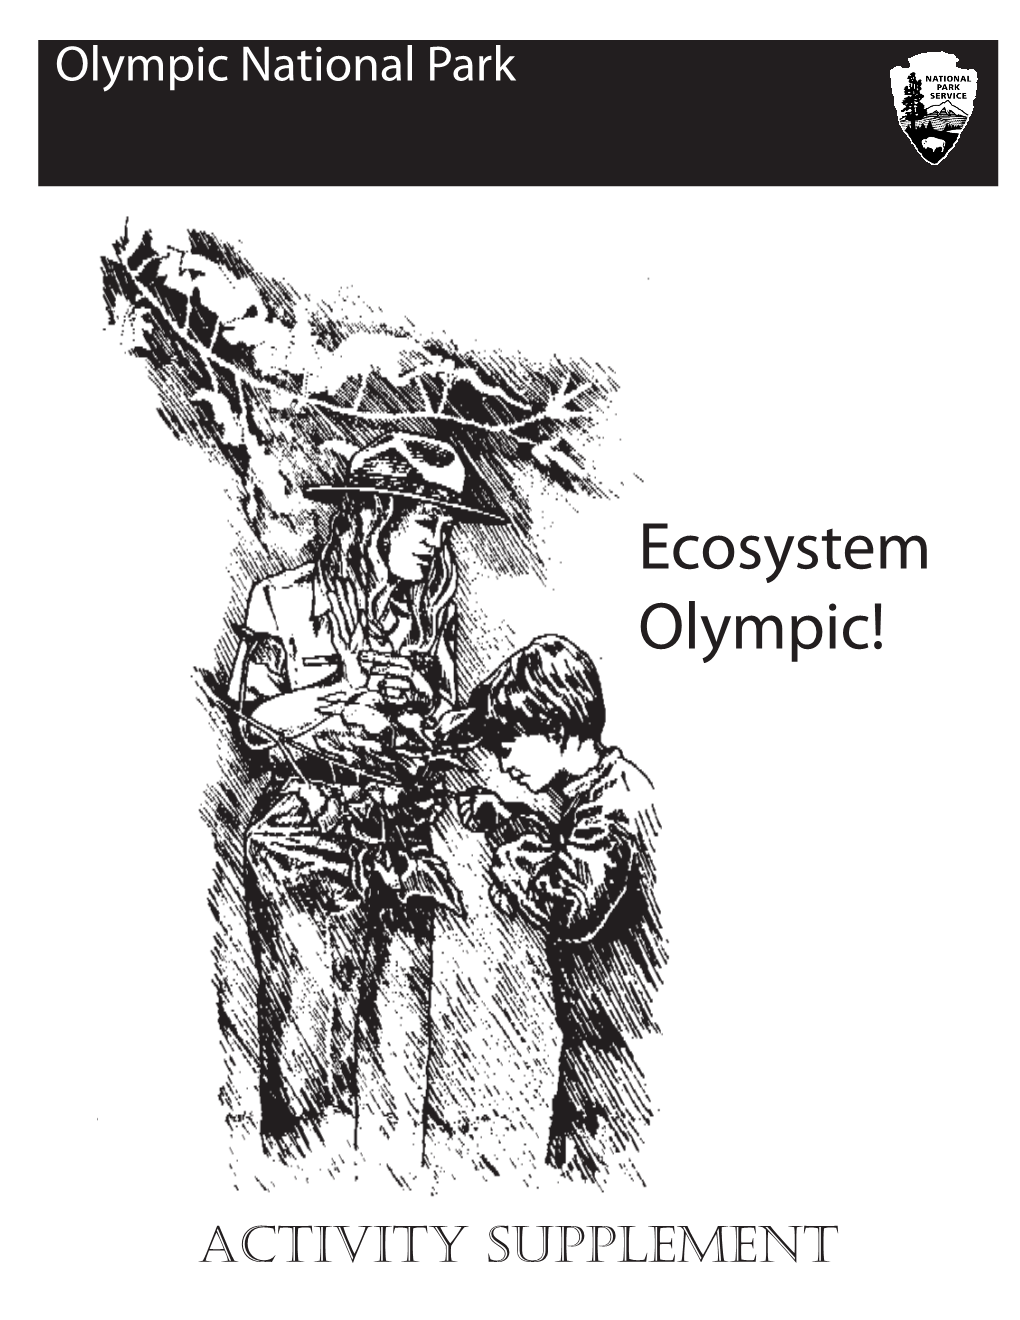 Ecosystem Olympic!